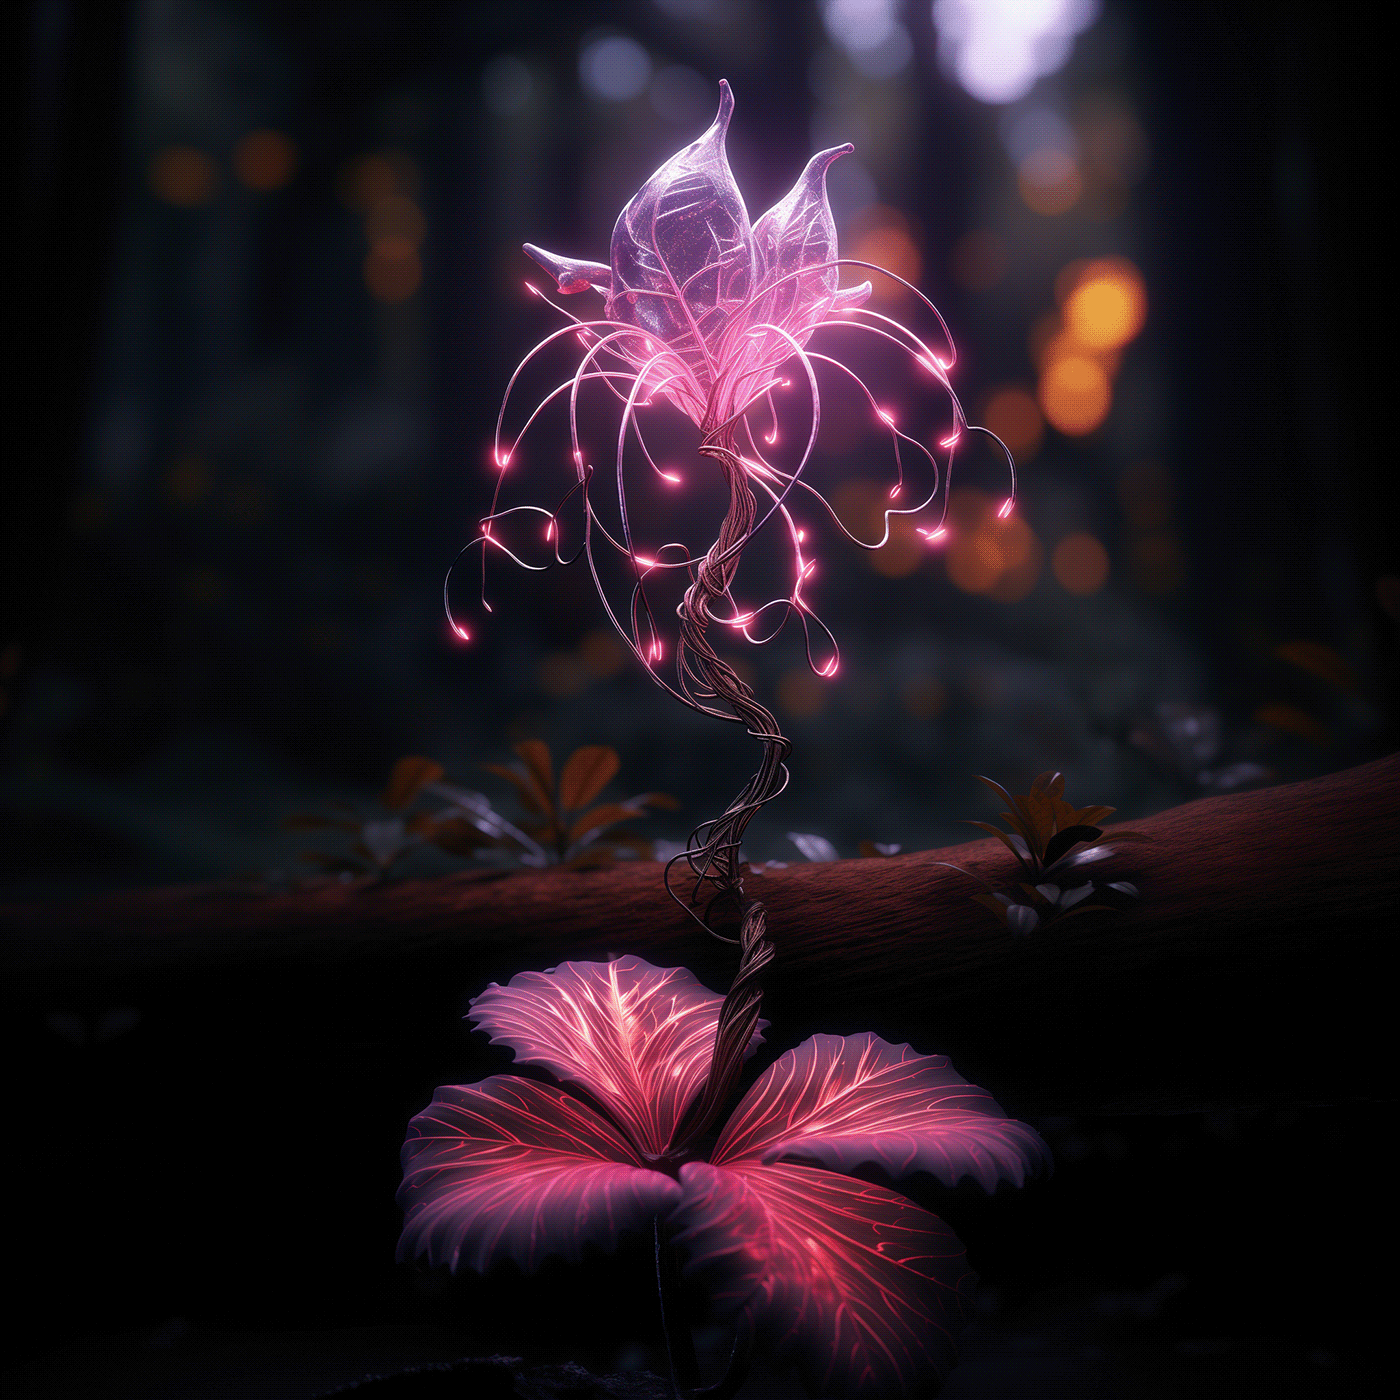 midjourney nature tech magic forest bioluminescence Cyberpunk crystal plants glowing plants utopic material